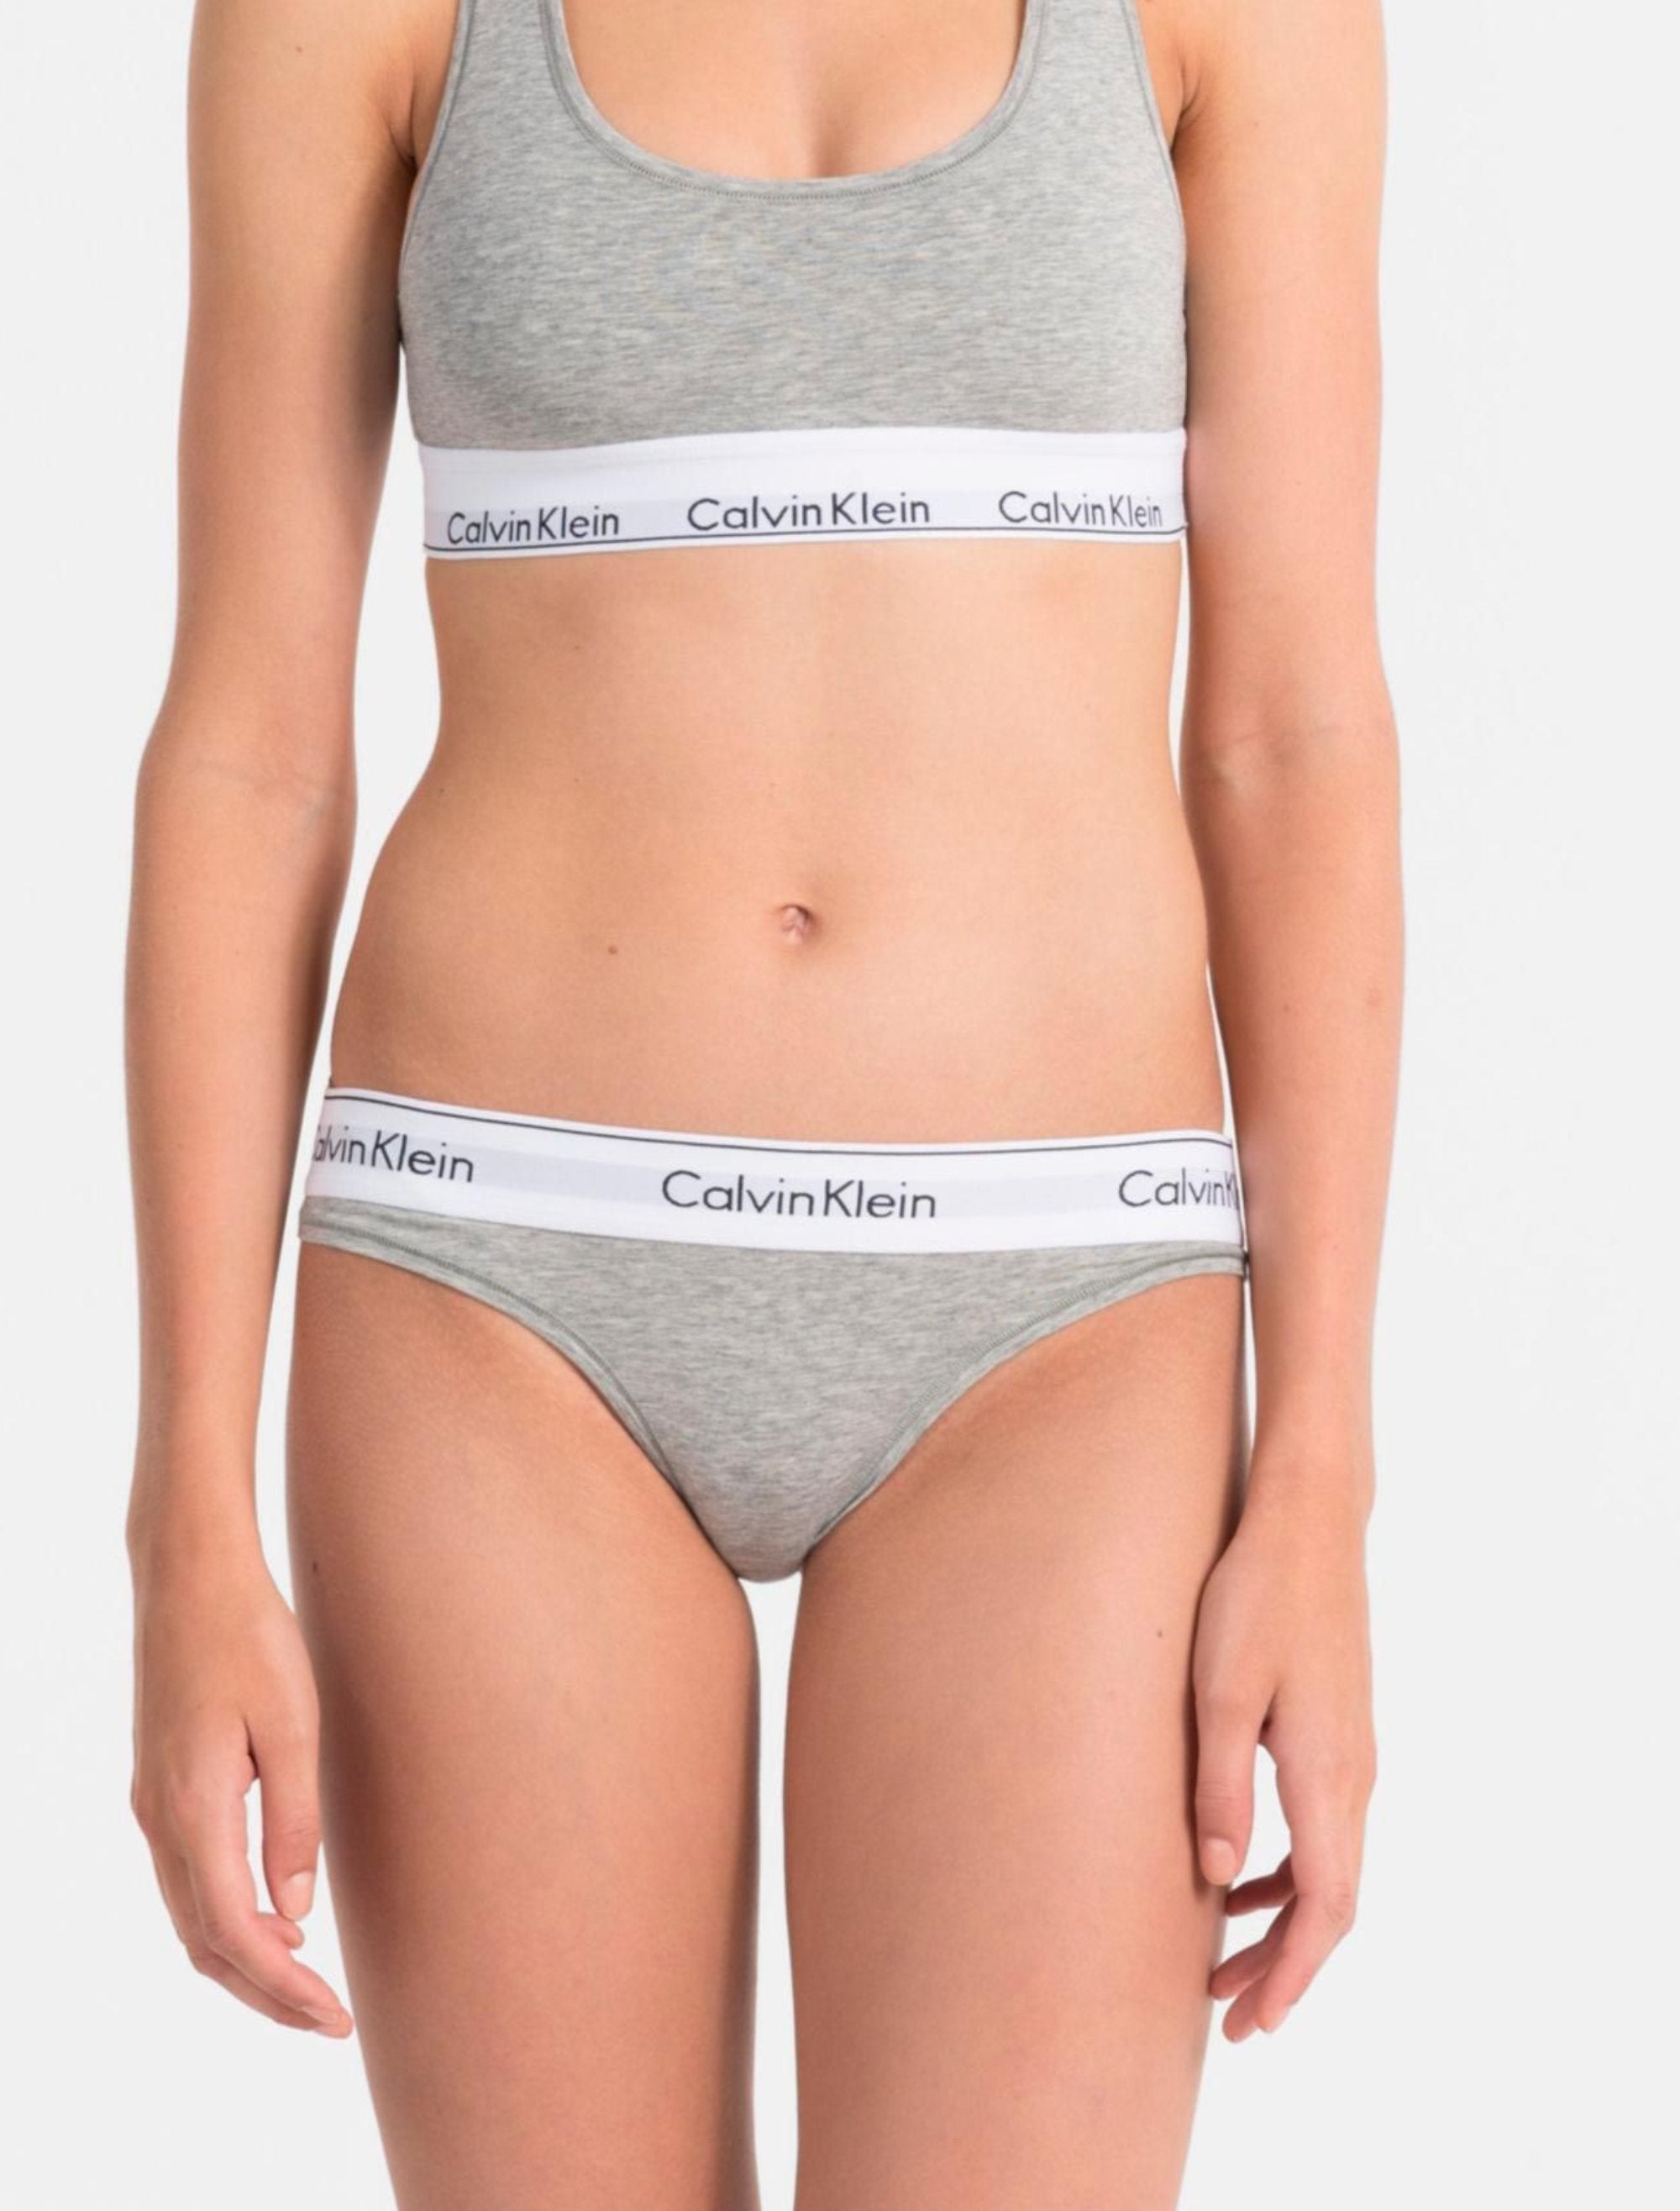 Modern Cotton Bikini - Calvin Klein - Genevieve's Wardrobe